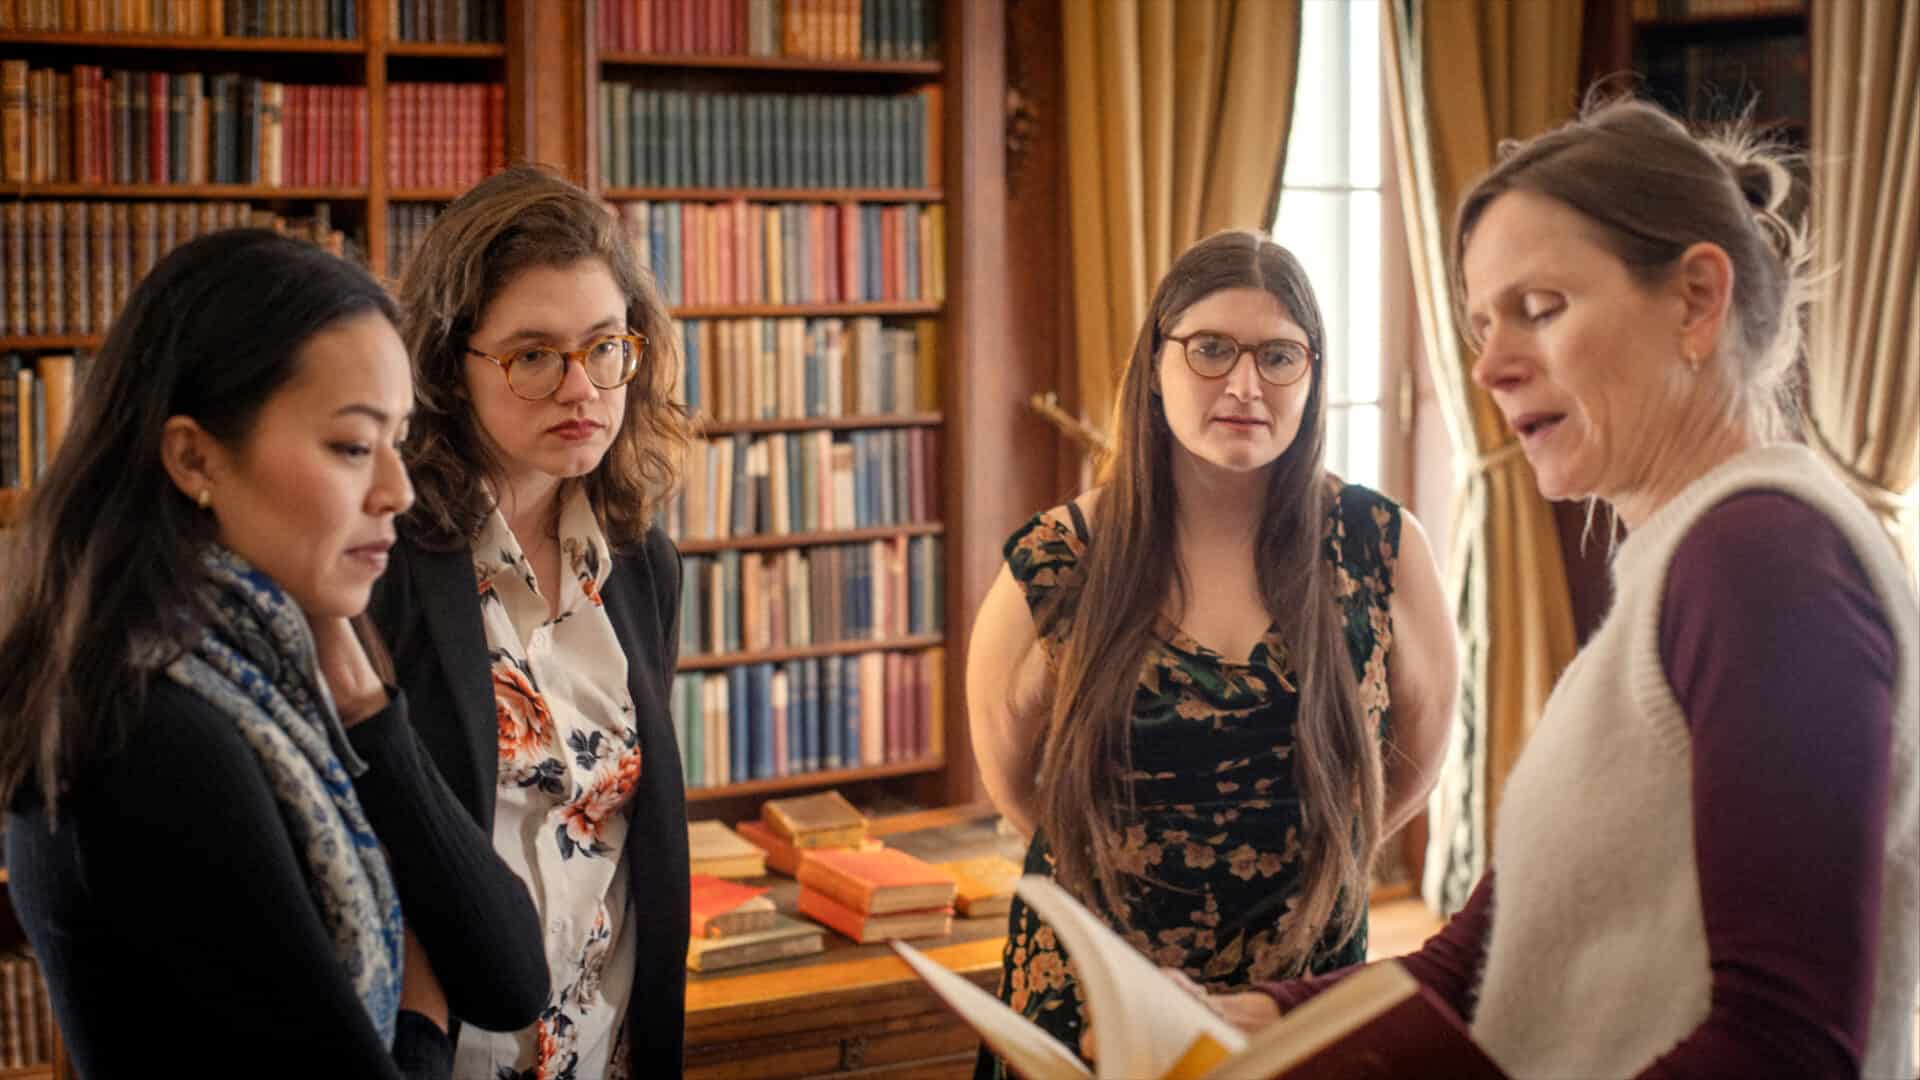 Martha Pham, Emily Atkinson and Emily Kiernan talk with Nynke Dorhout in Edith Wharton's library. Press photo courtesy of the Mount.